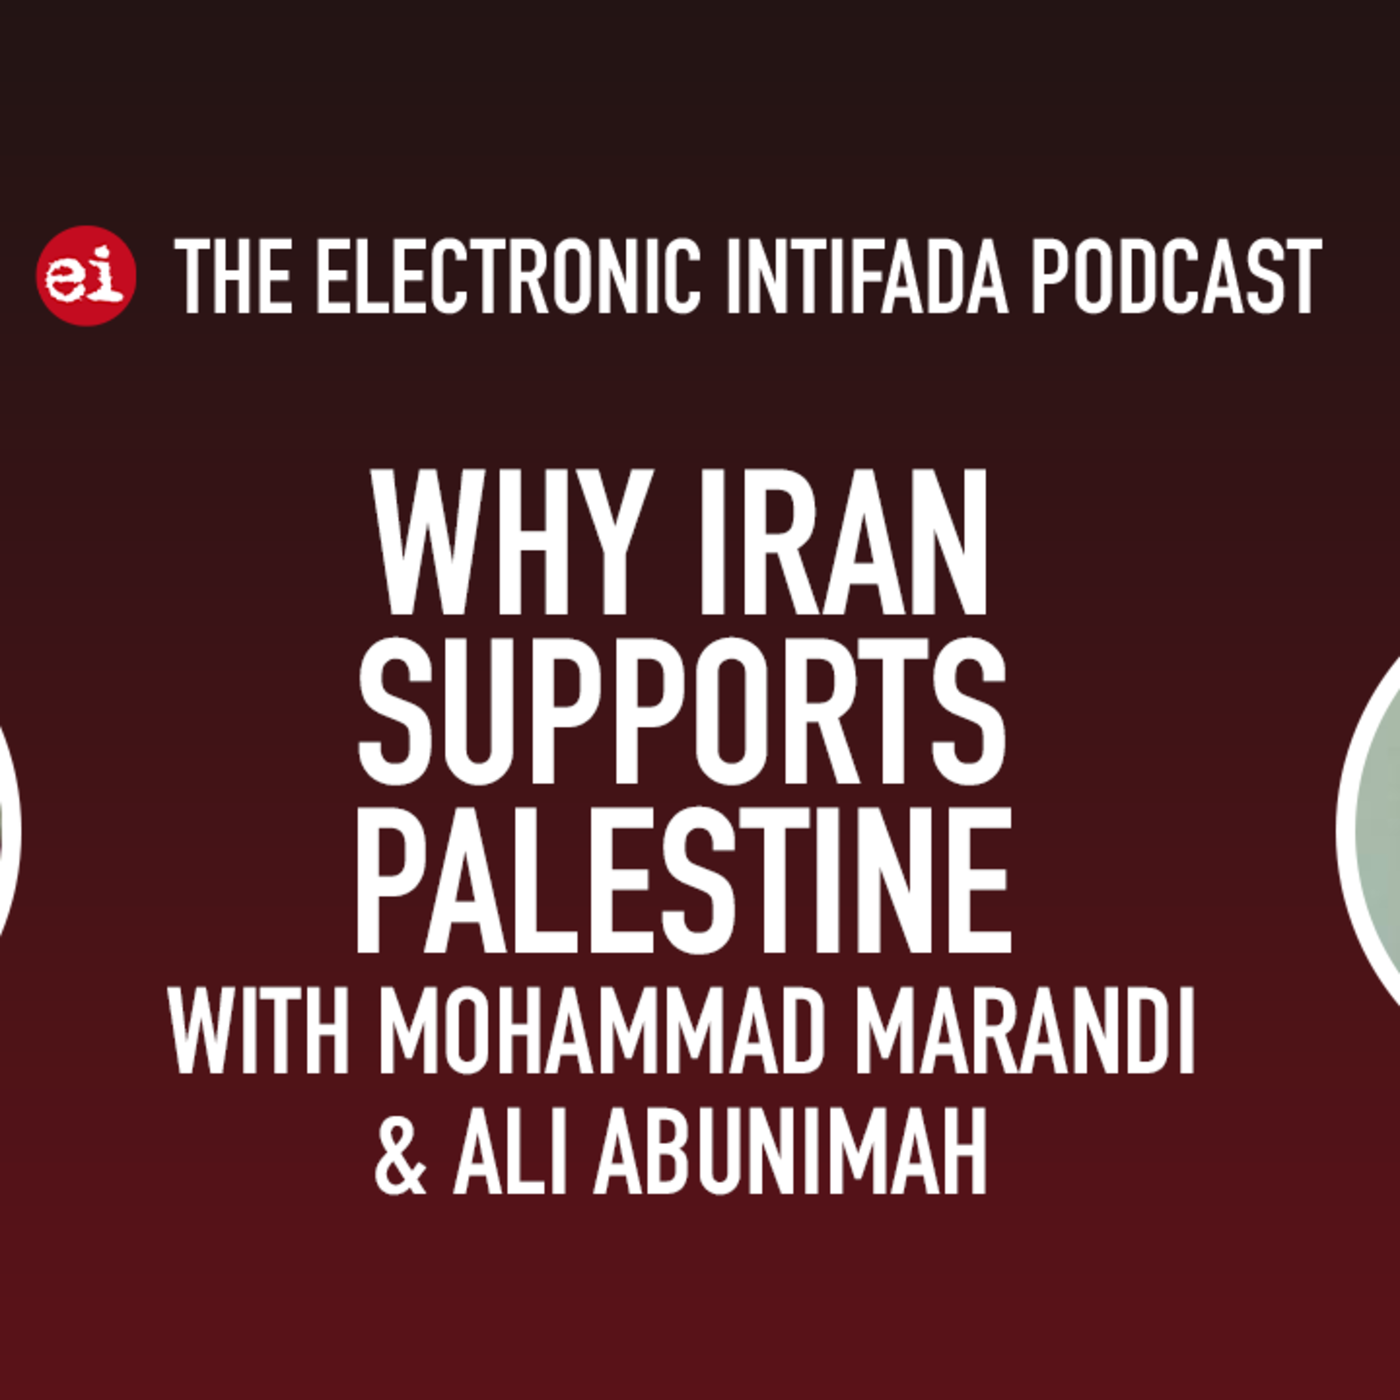 Why Iran supports Palestine